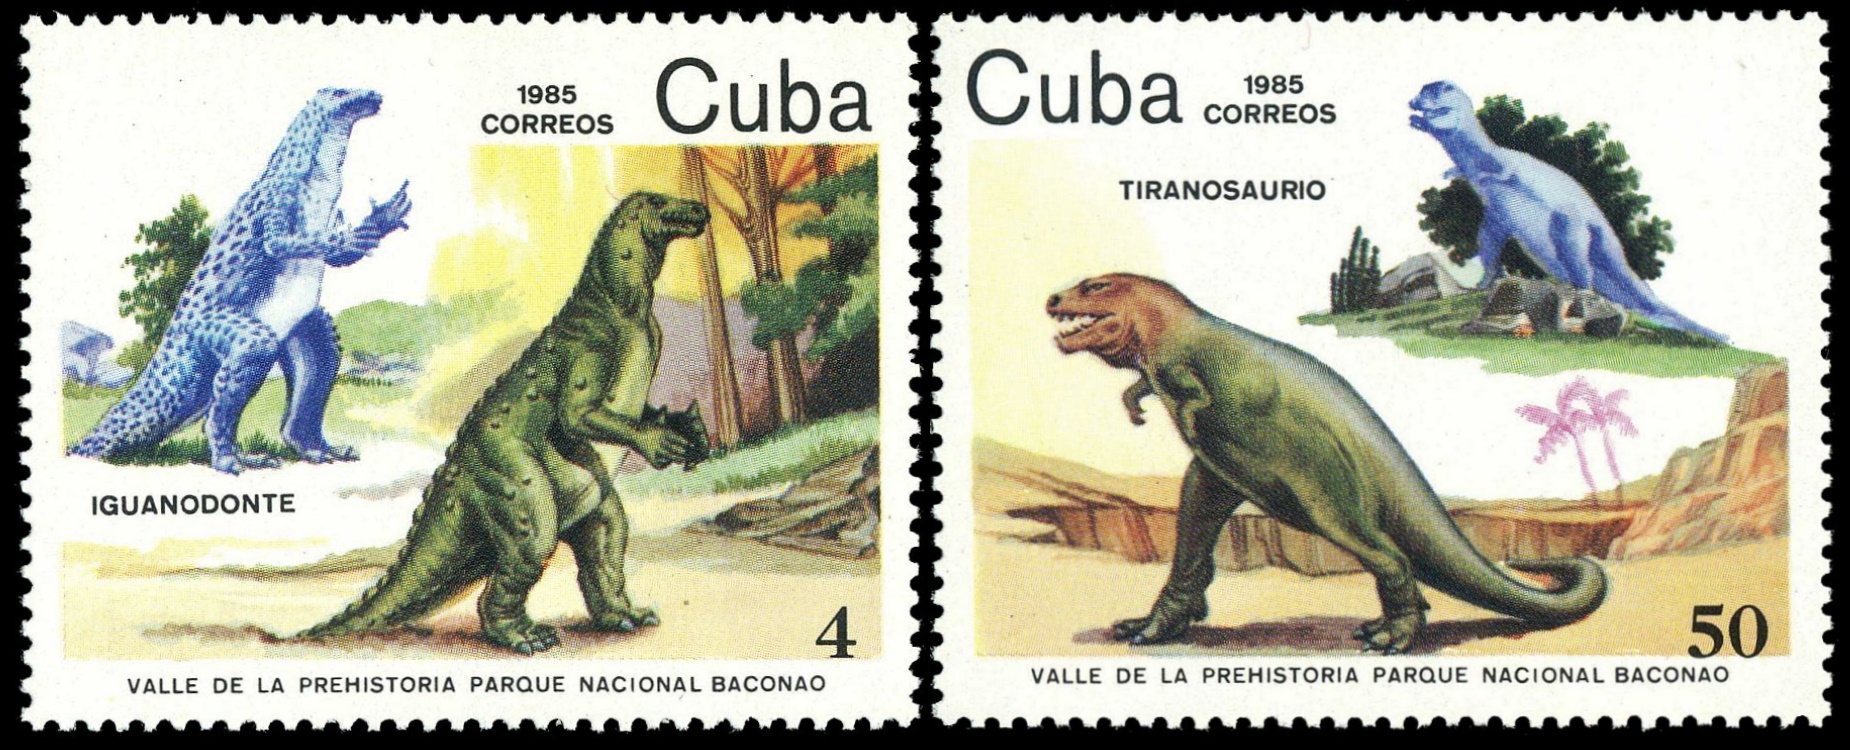 Iguanodon and Tyrannosaurus dinosaurs on stamps of Cuba 1985